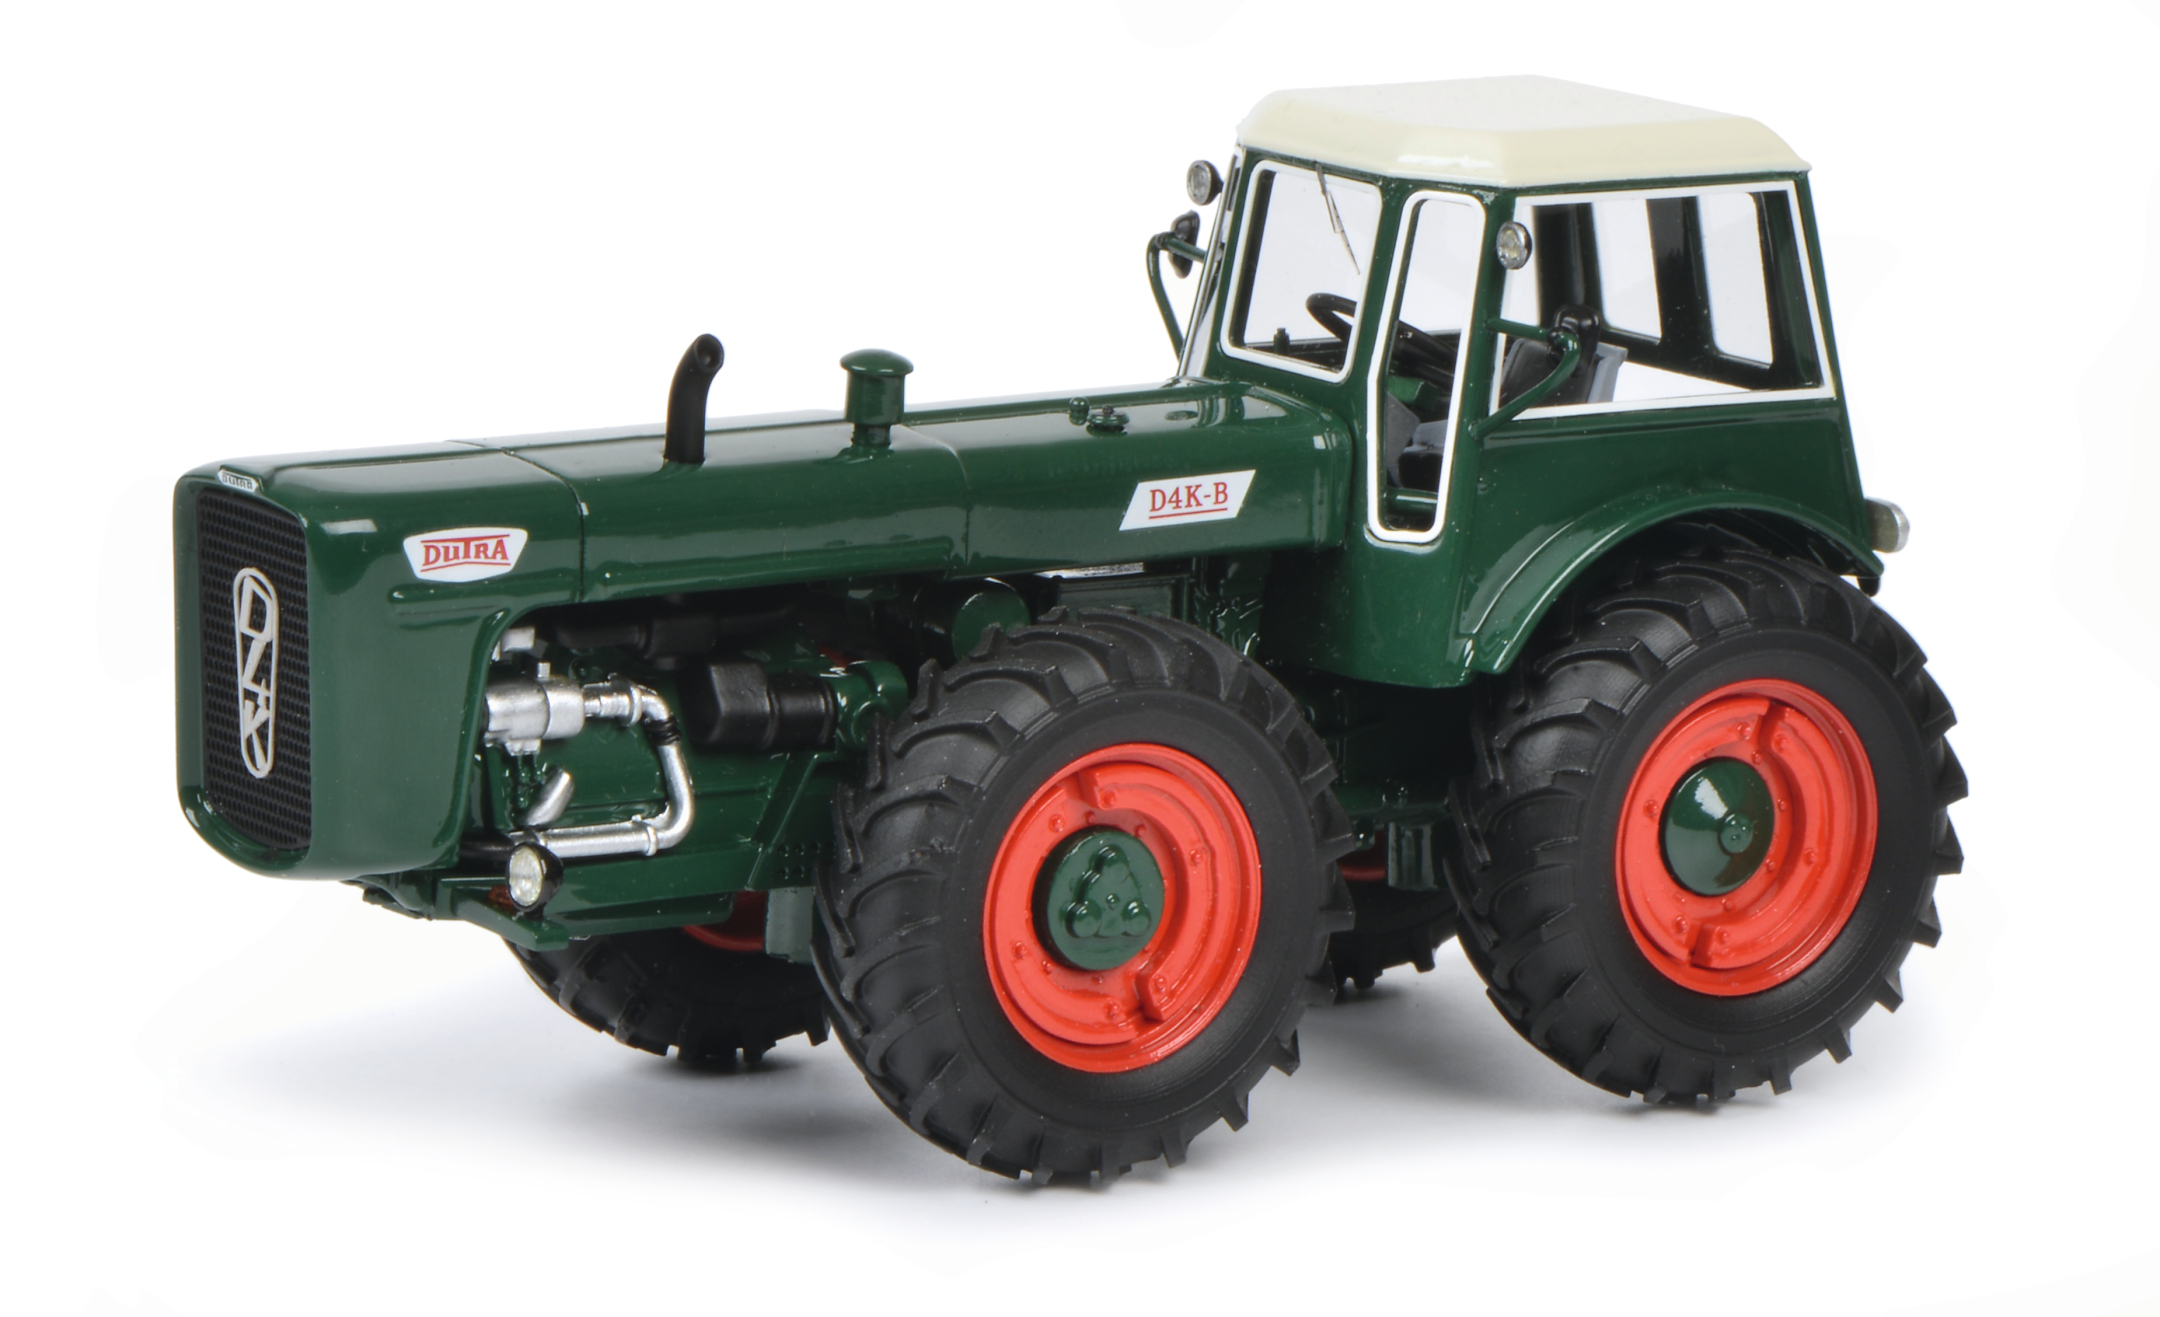 Dutra D4K B grün`1964 43 Traktor PRO.R Resin